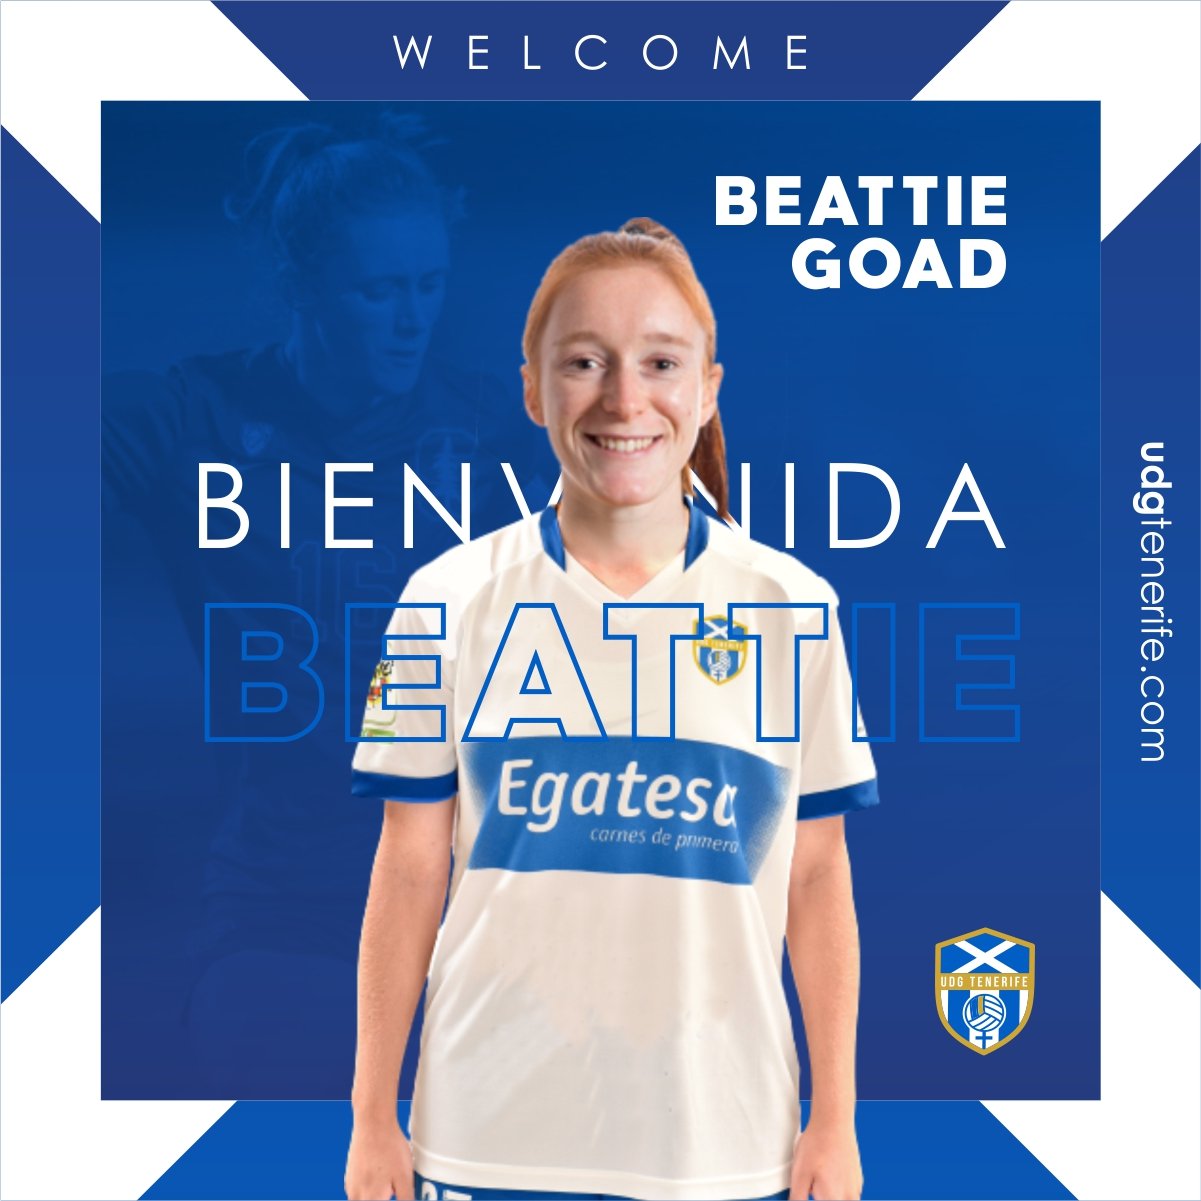 La australiana Beatrice Goad, nueva jugadora de la UDG Tenerife